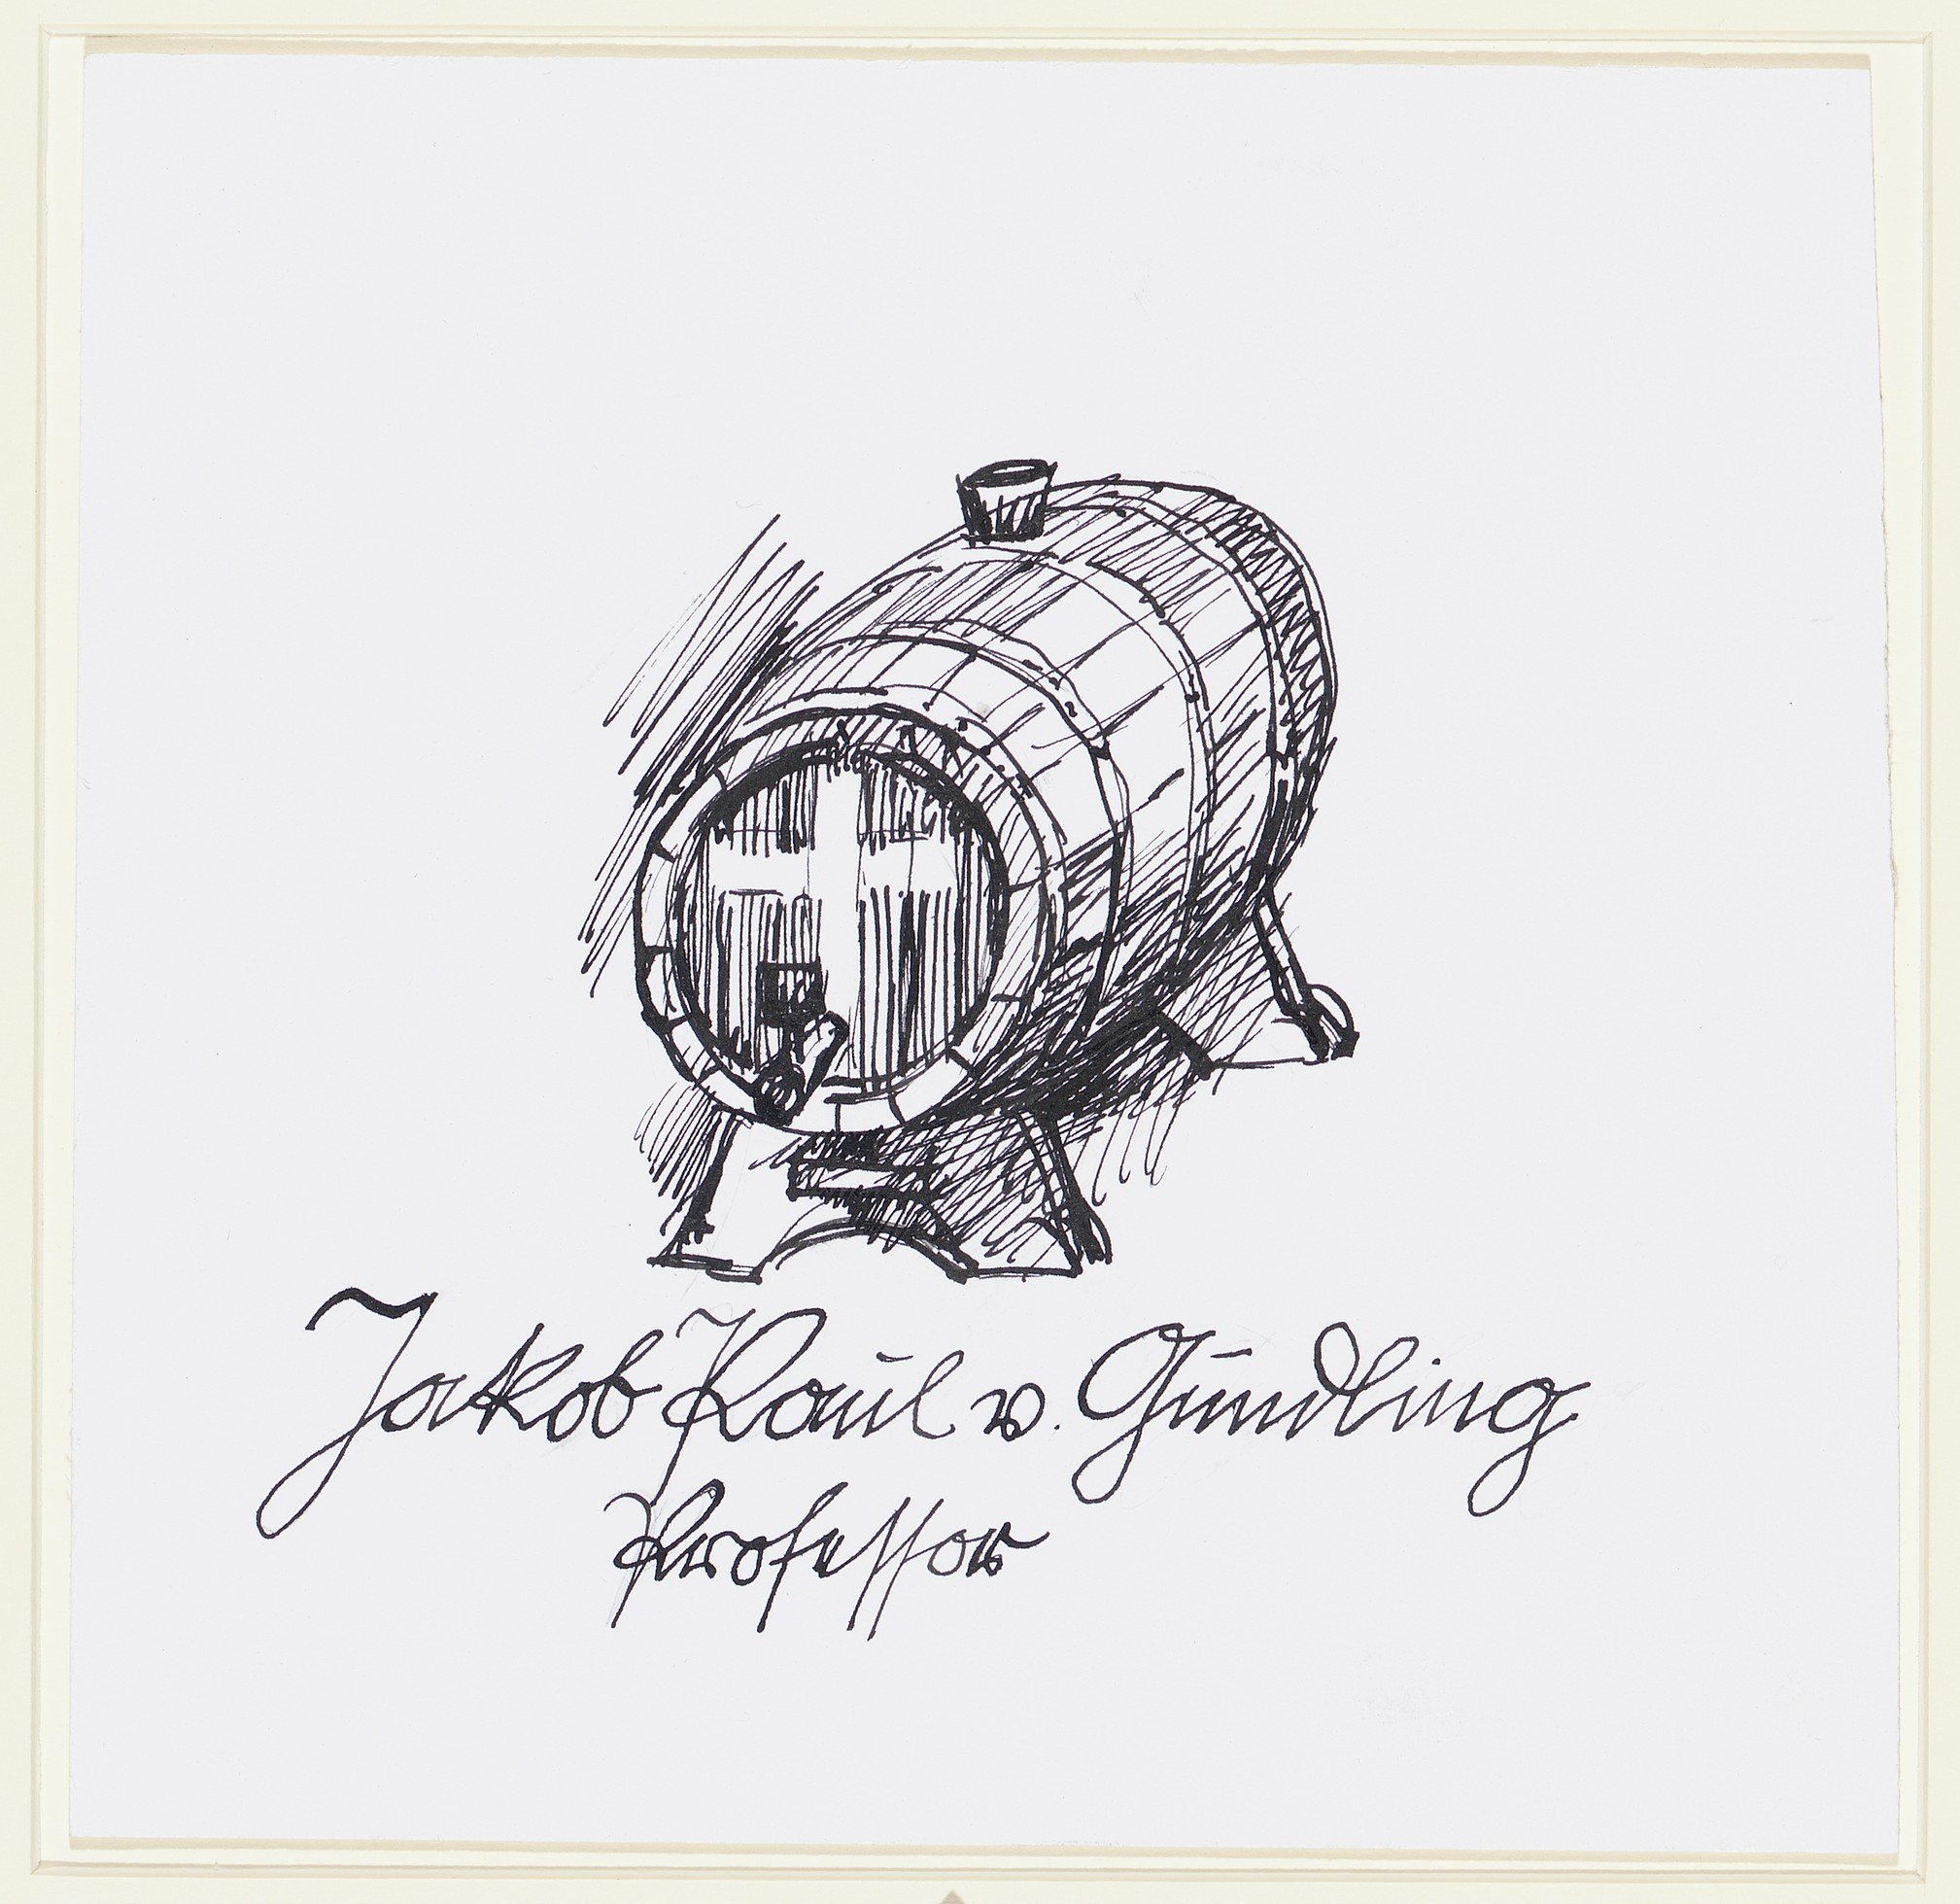 Zeichnung "Jakob Paul v. Gundling / Professor" (Museum für Sepulkralkultur CC BY-NC-SA)